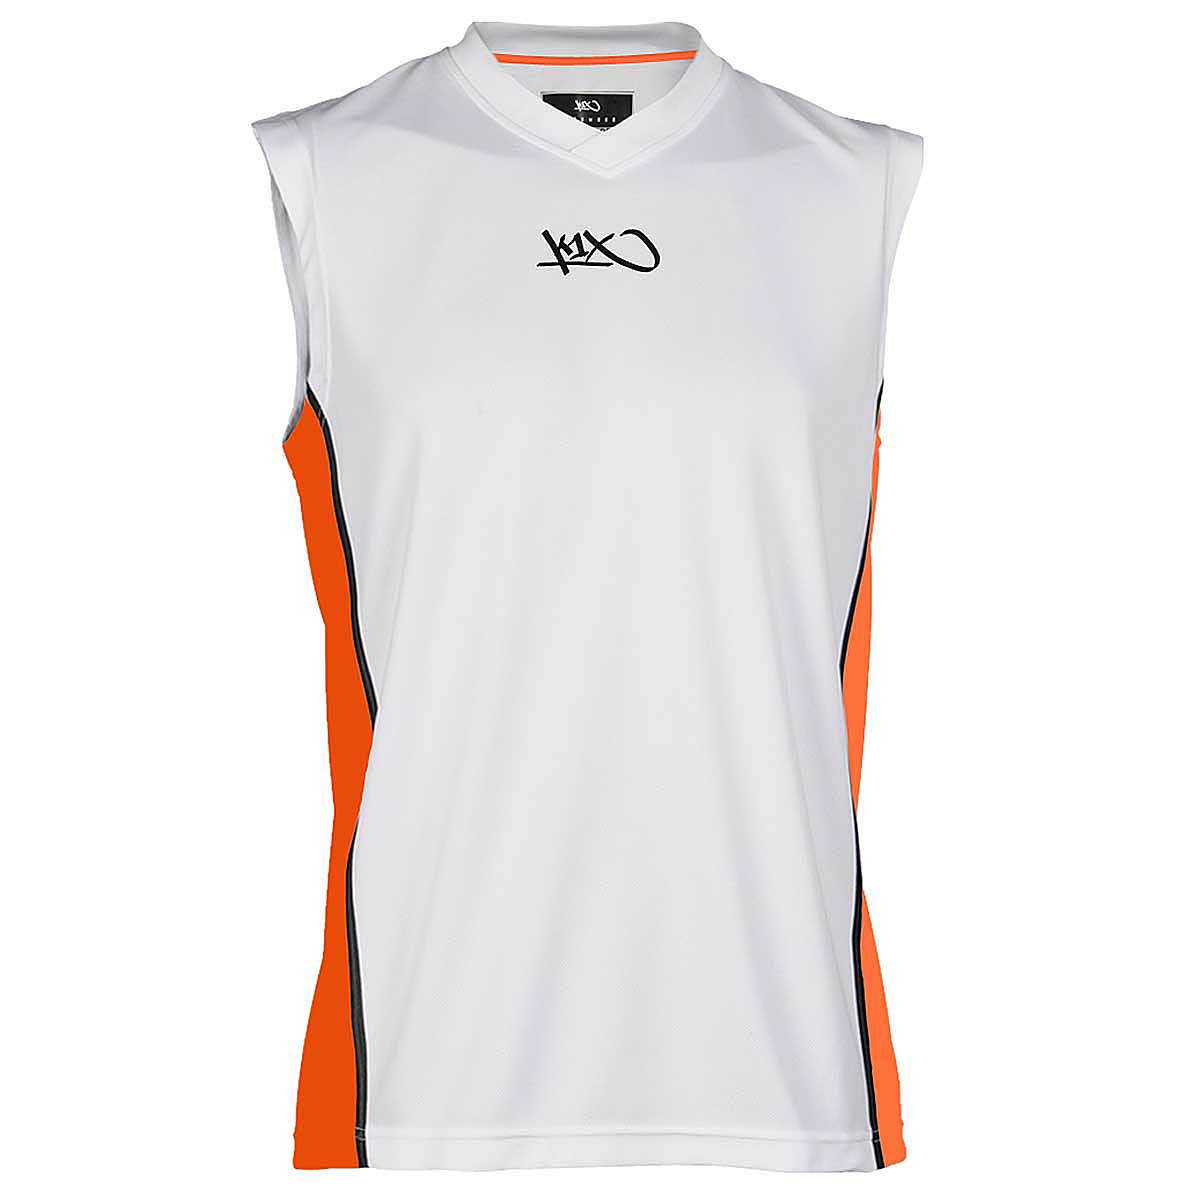 K1X K1X Hardwood League Uniform Jersey Mk2, White/Orange/Black